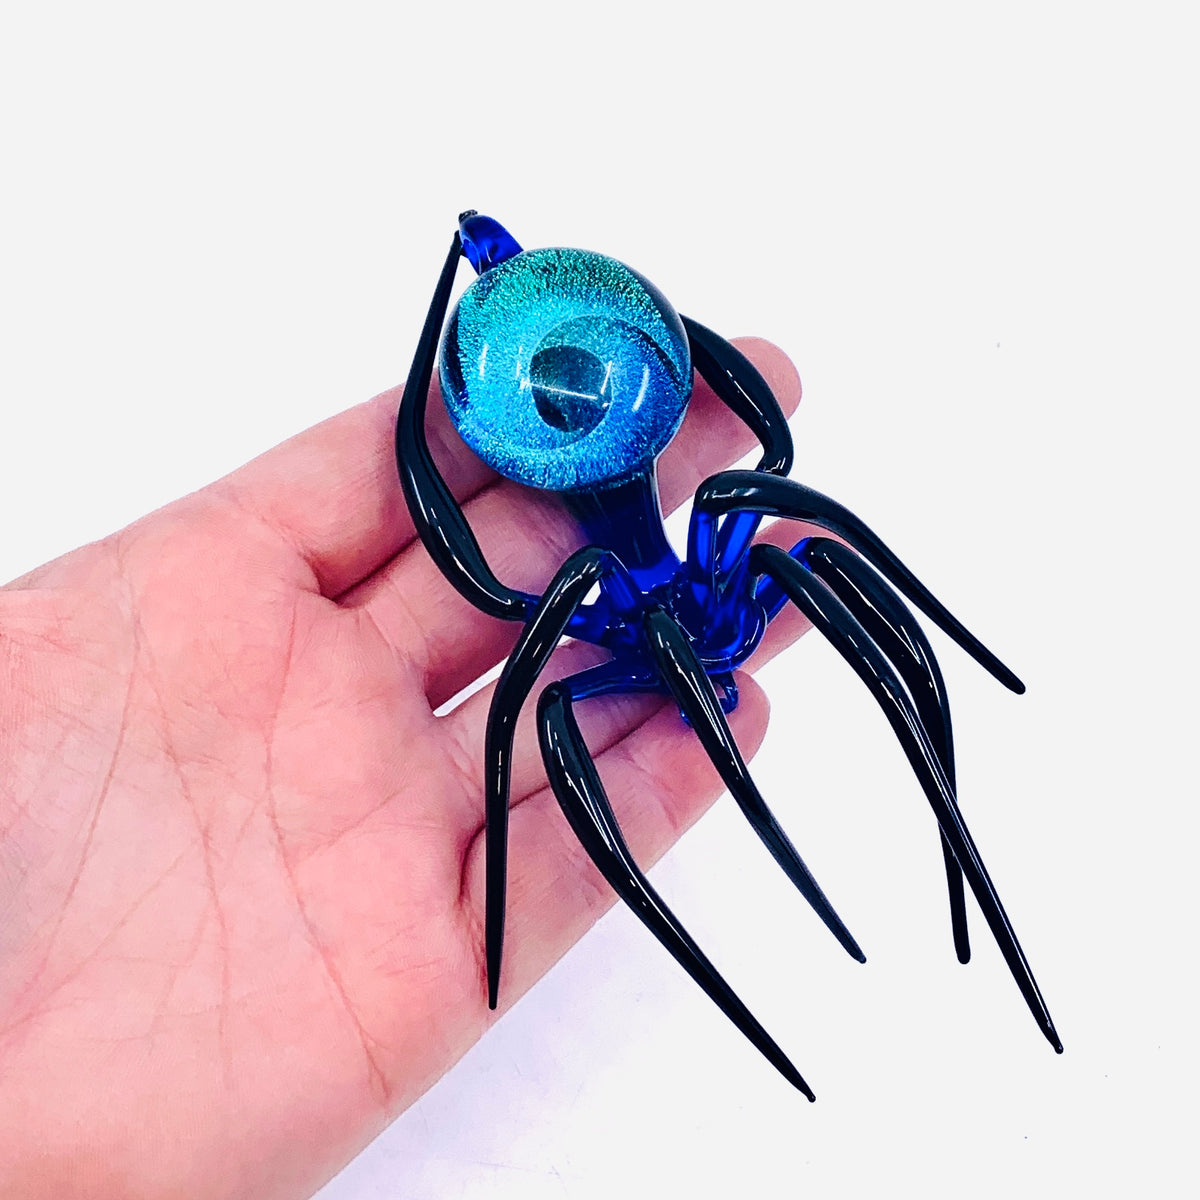 Glass Galaxy Spider Ornament, 55